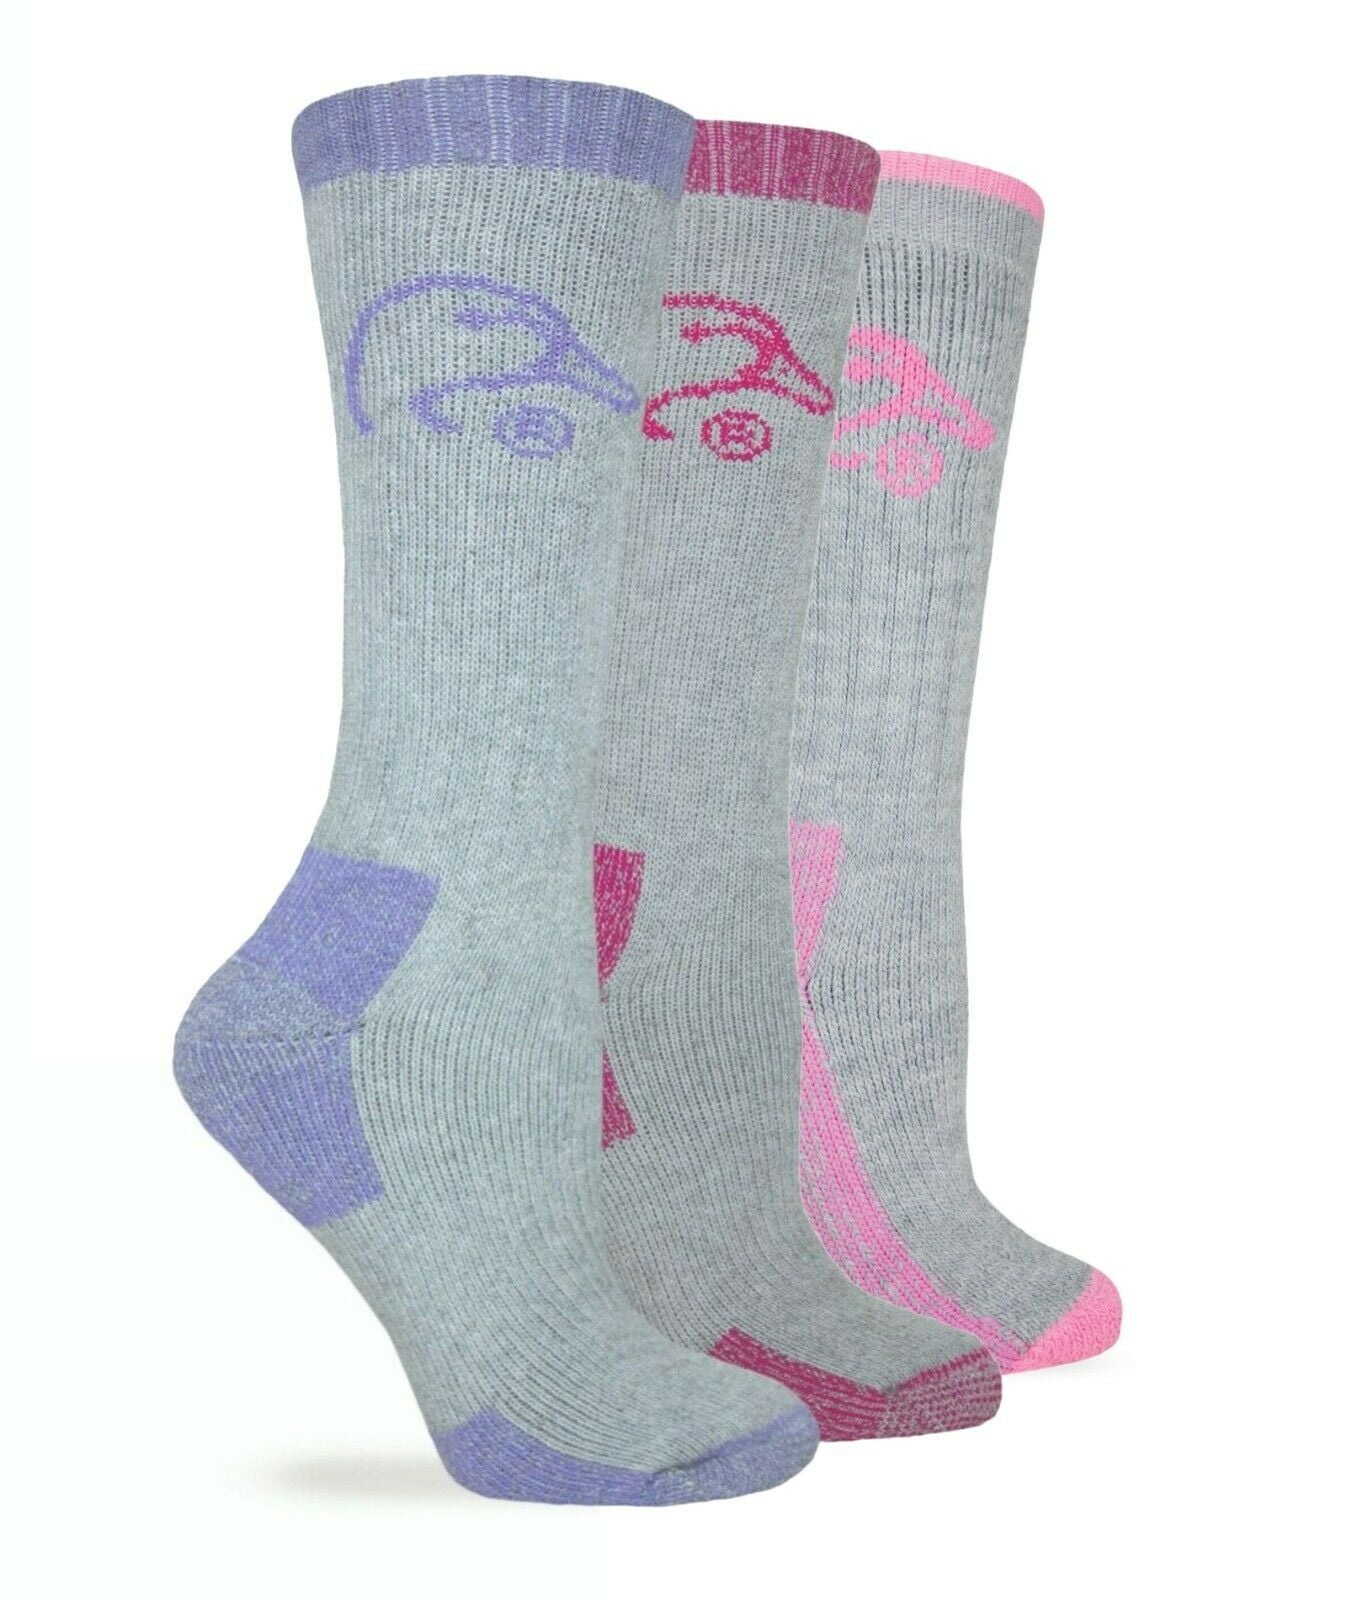 Realtree Womens Full Cushion Merino Wool Camo Pattern Crew Socks 4 Pair Pack Pink/Purple Camo and Grey, Womens Shoe Size 6-9 - Sock Size Medium 